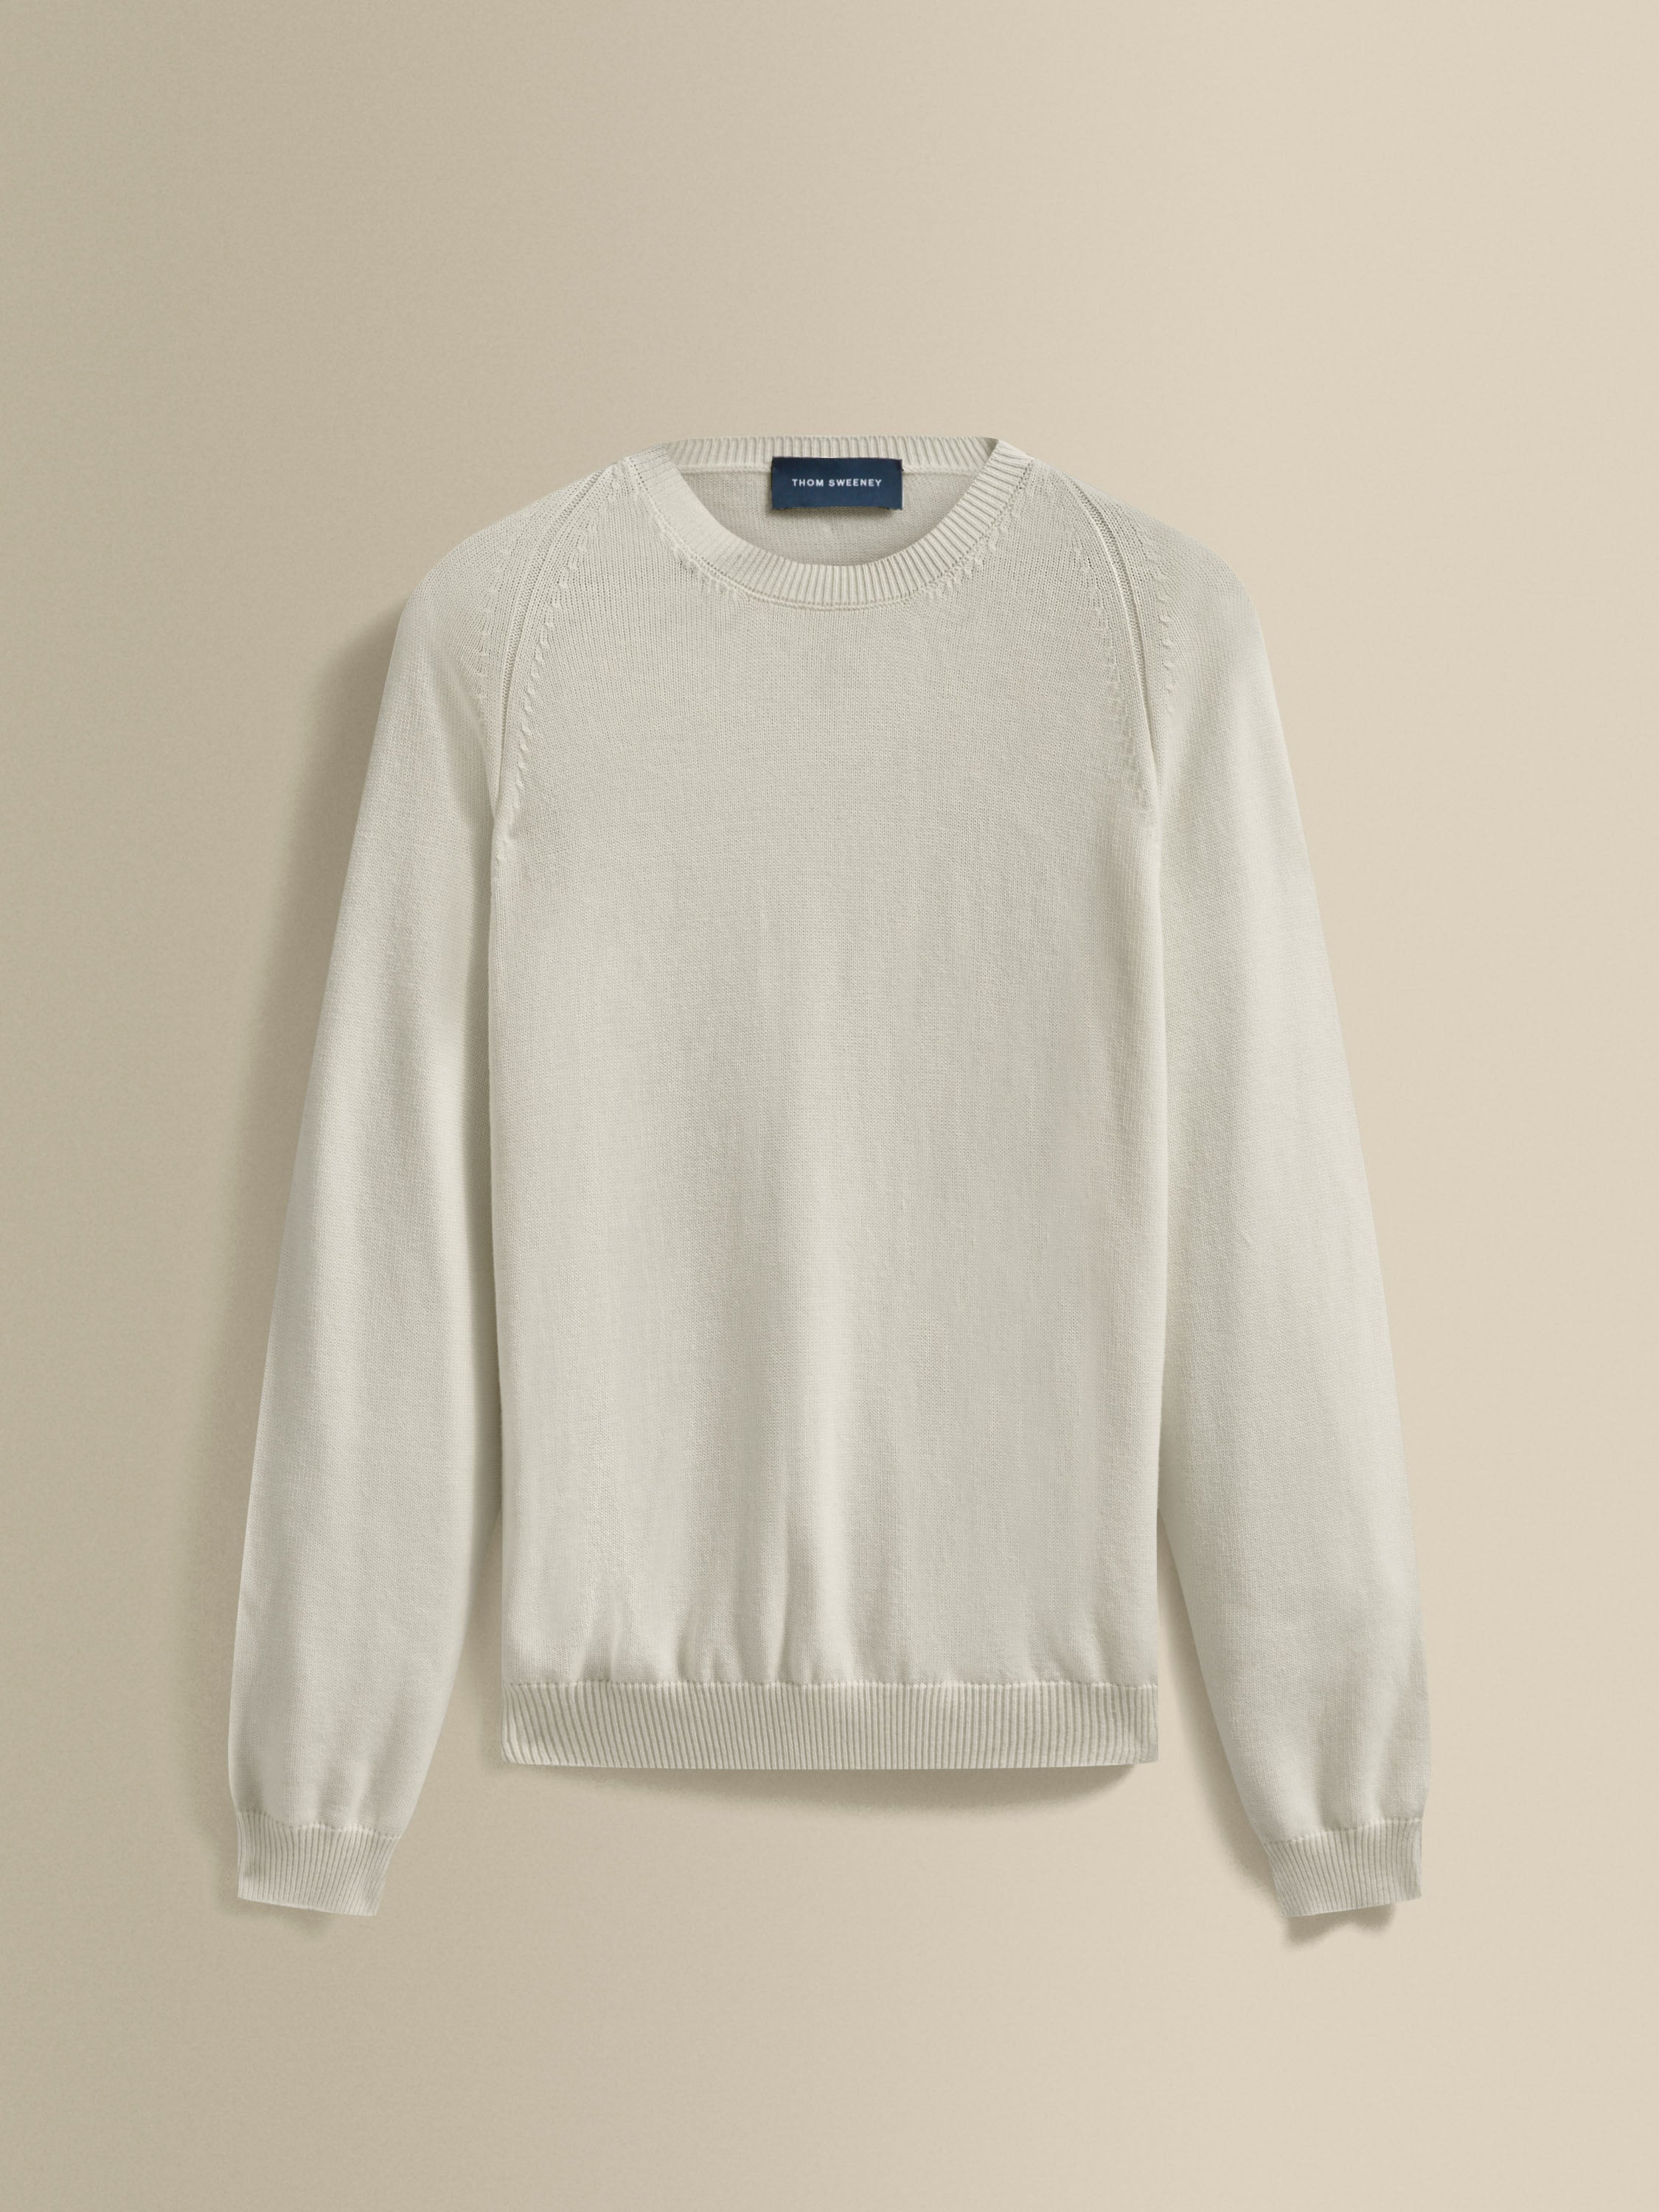 Cotton Raglan Crew Neck Sweater Off White Product Image